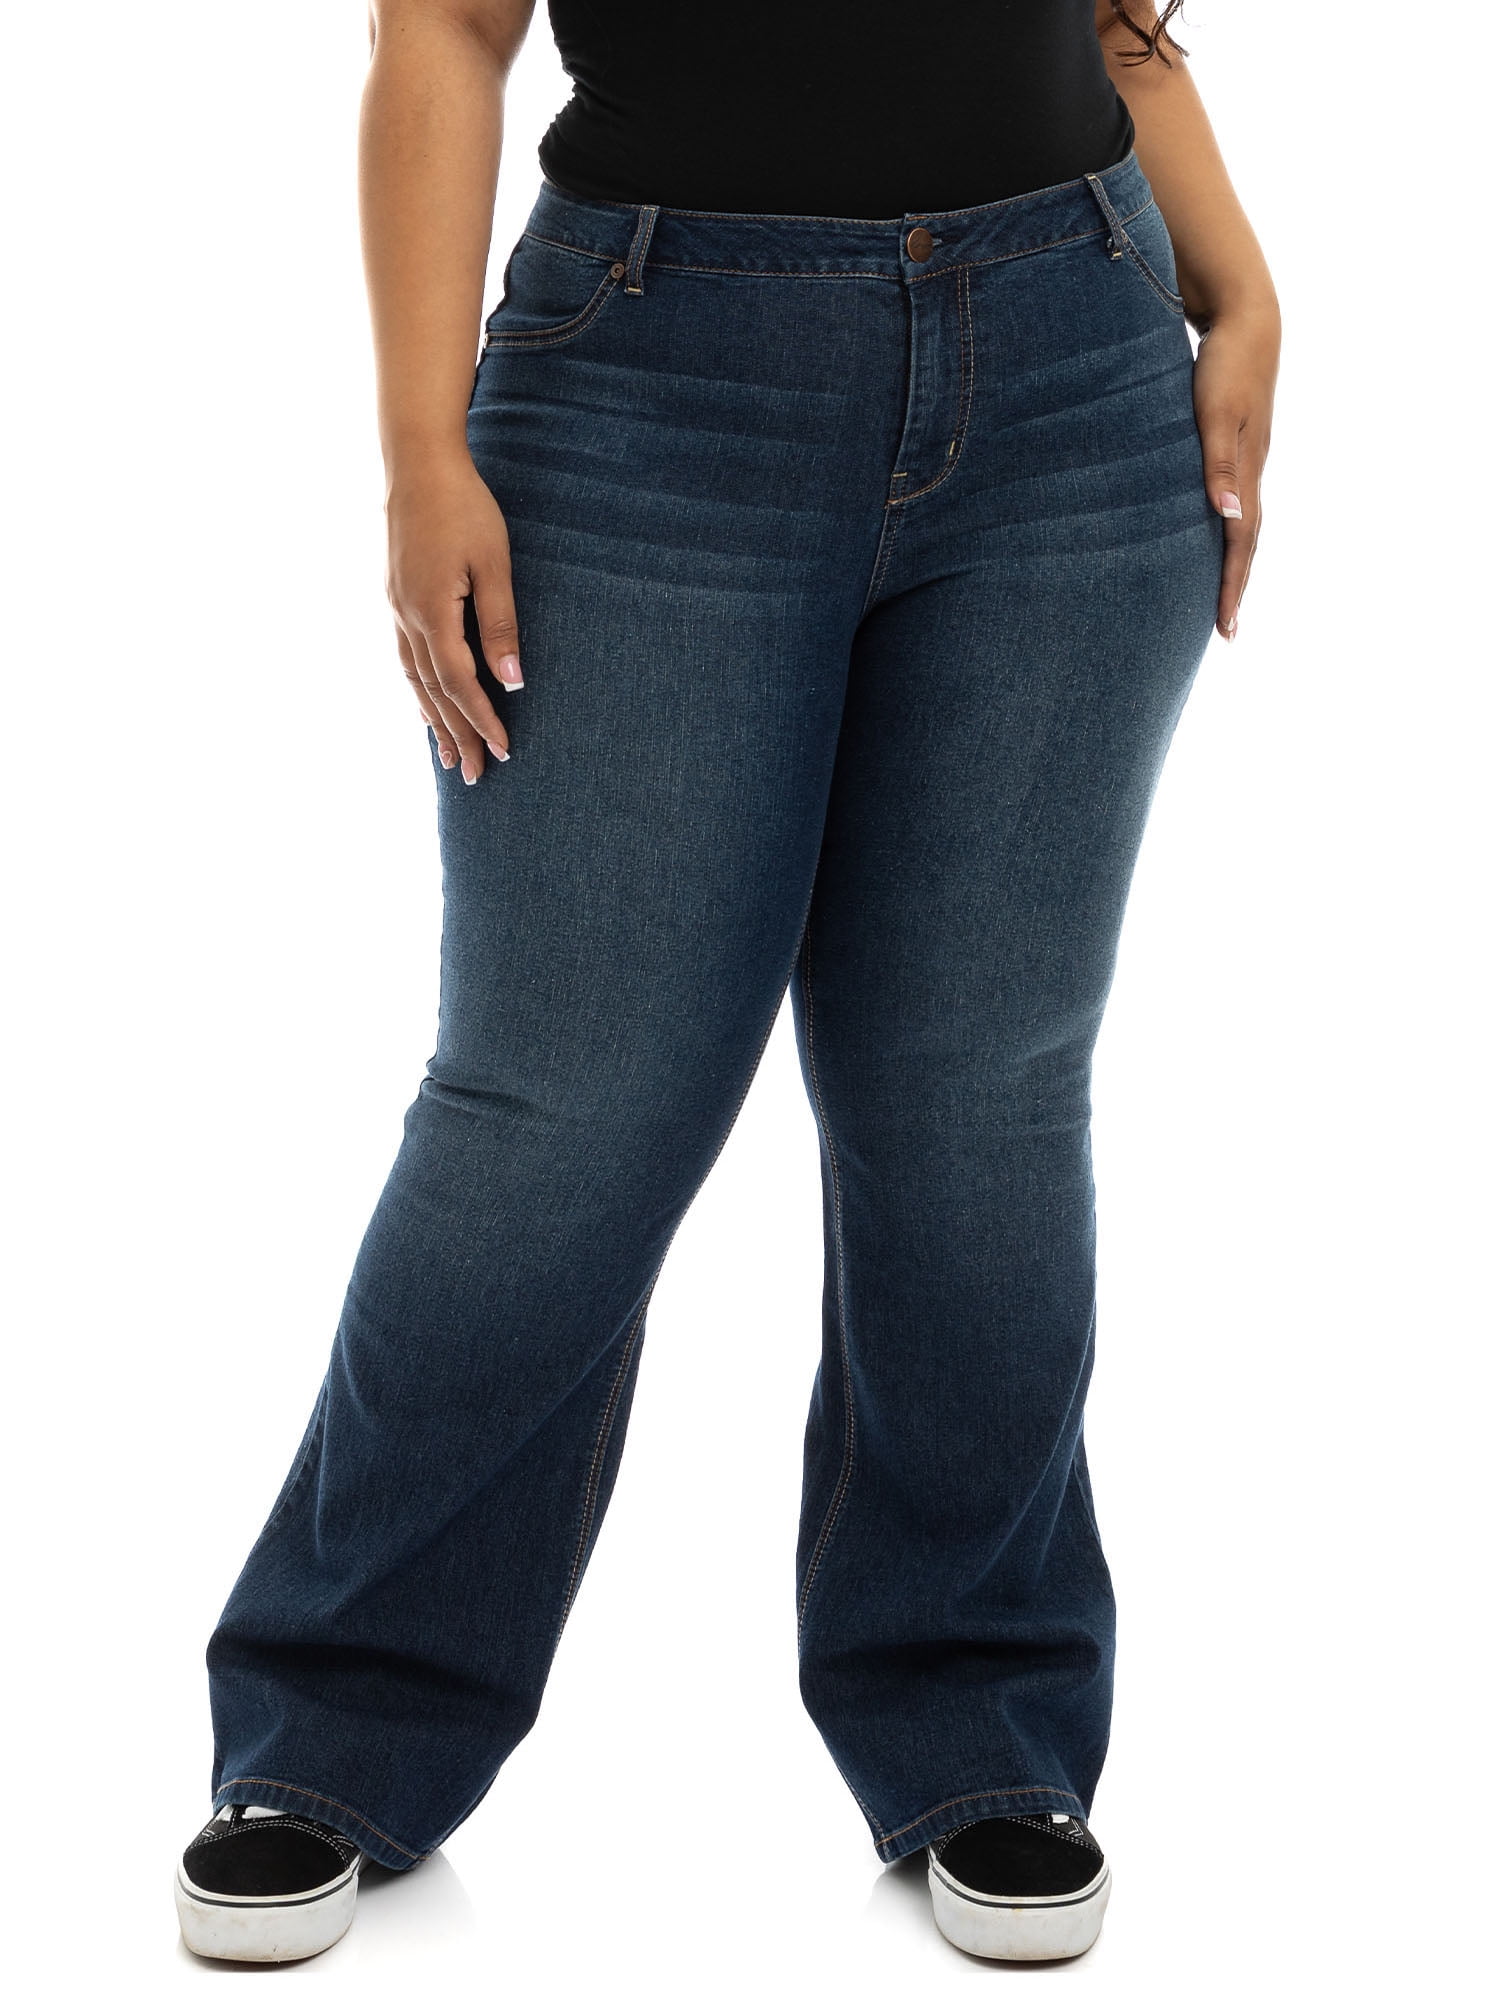 A3 Denim Women's Plus Size High Rise Flare Jeans